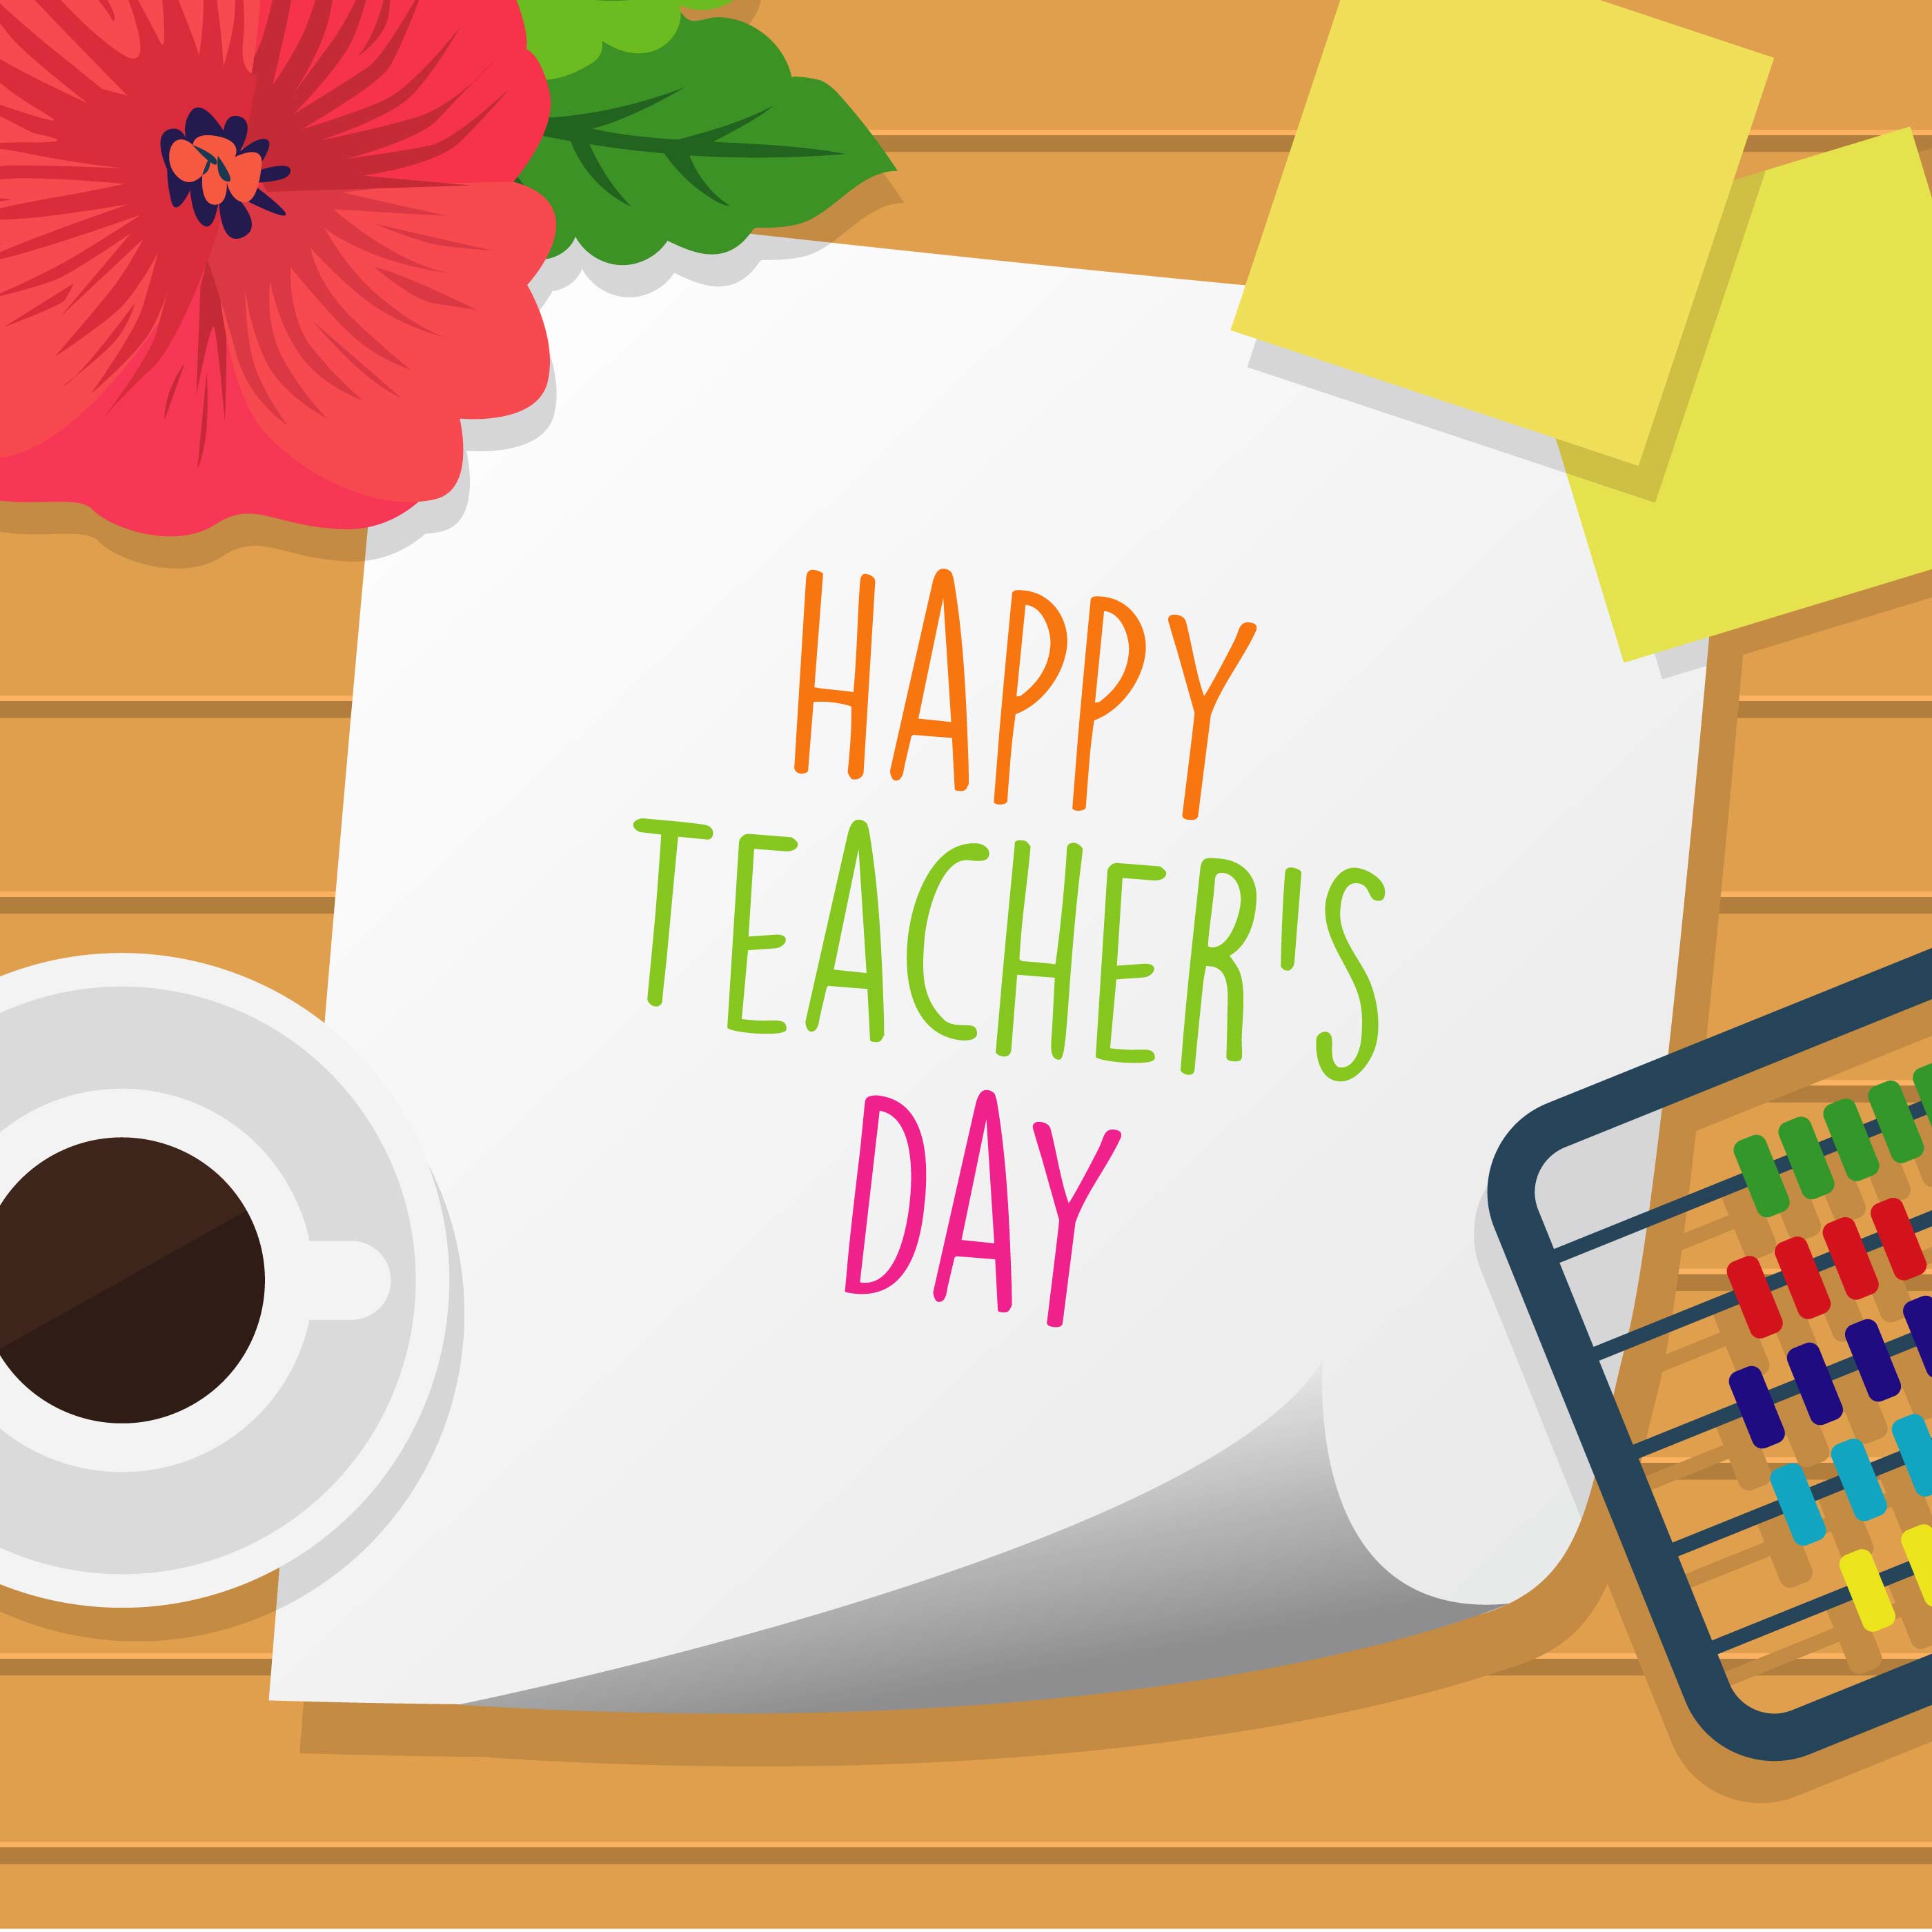 Happy Teachers Day - Download Free Vectors, Clipart ...